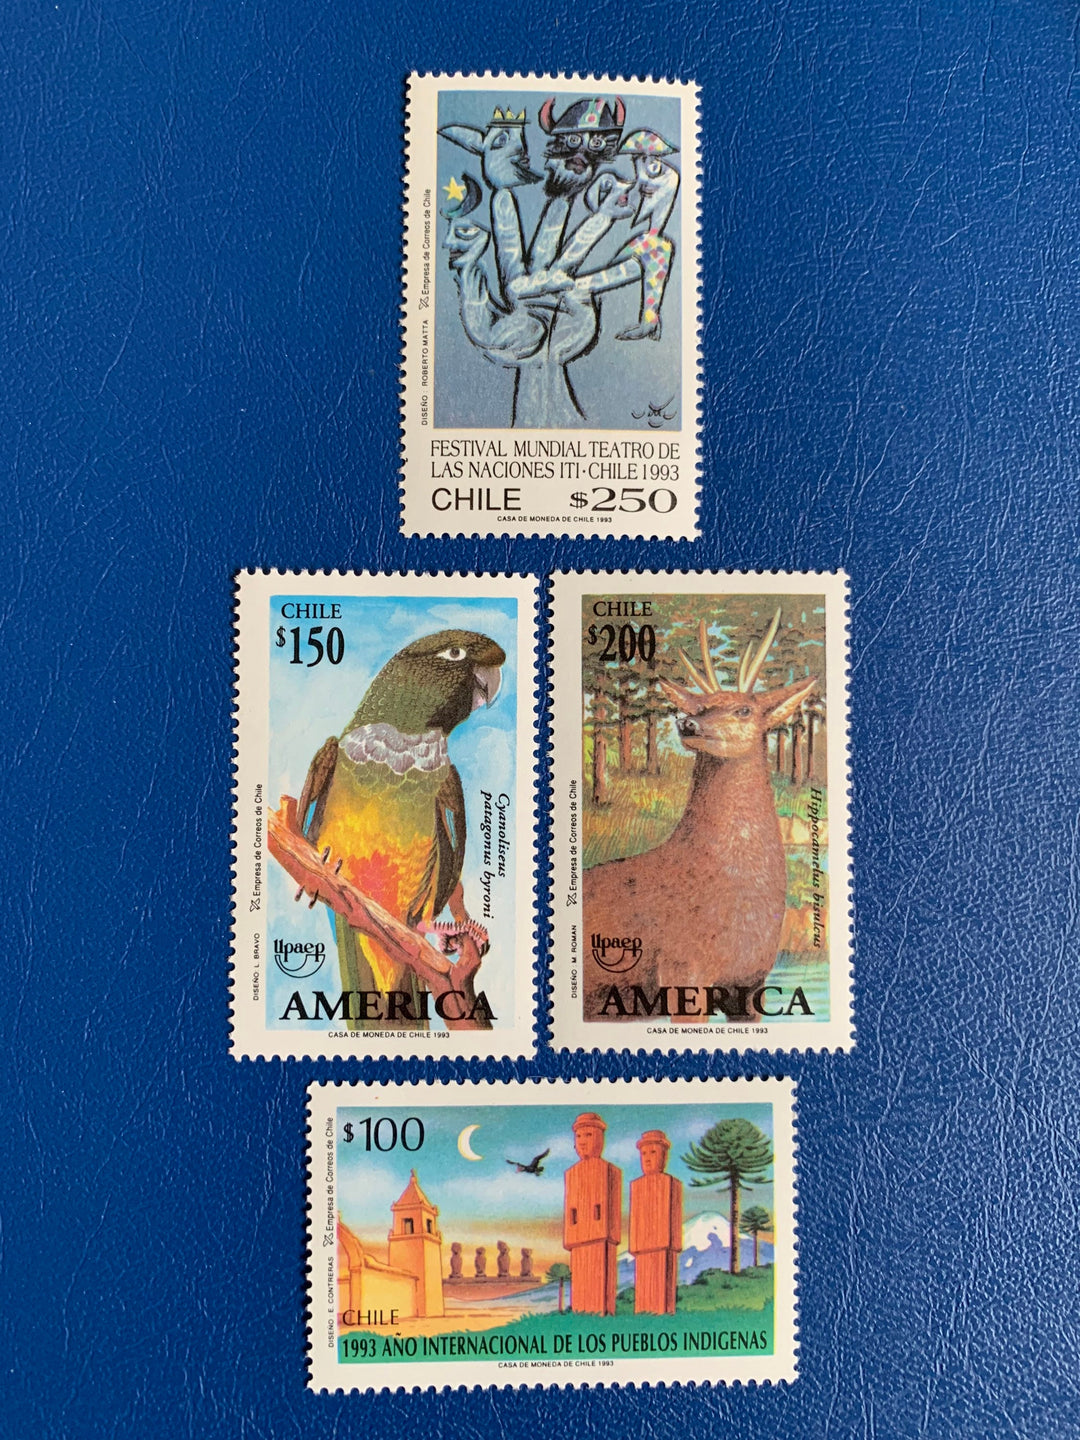 Chile - Original Vintage Postage Stamps- 1993 Endangered Species, Intl Year of Indigenous Peoples, Folk Festival